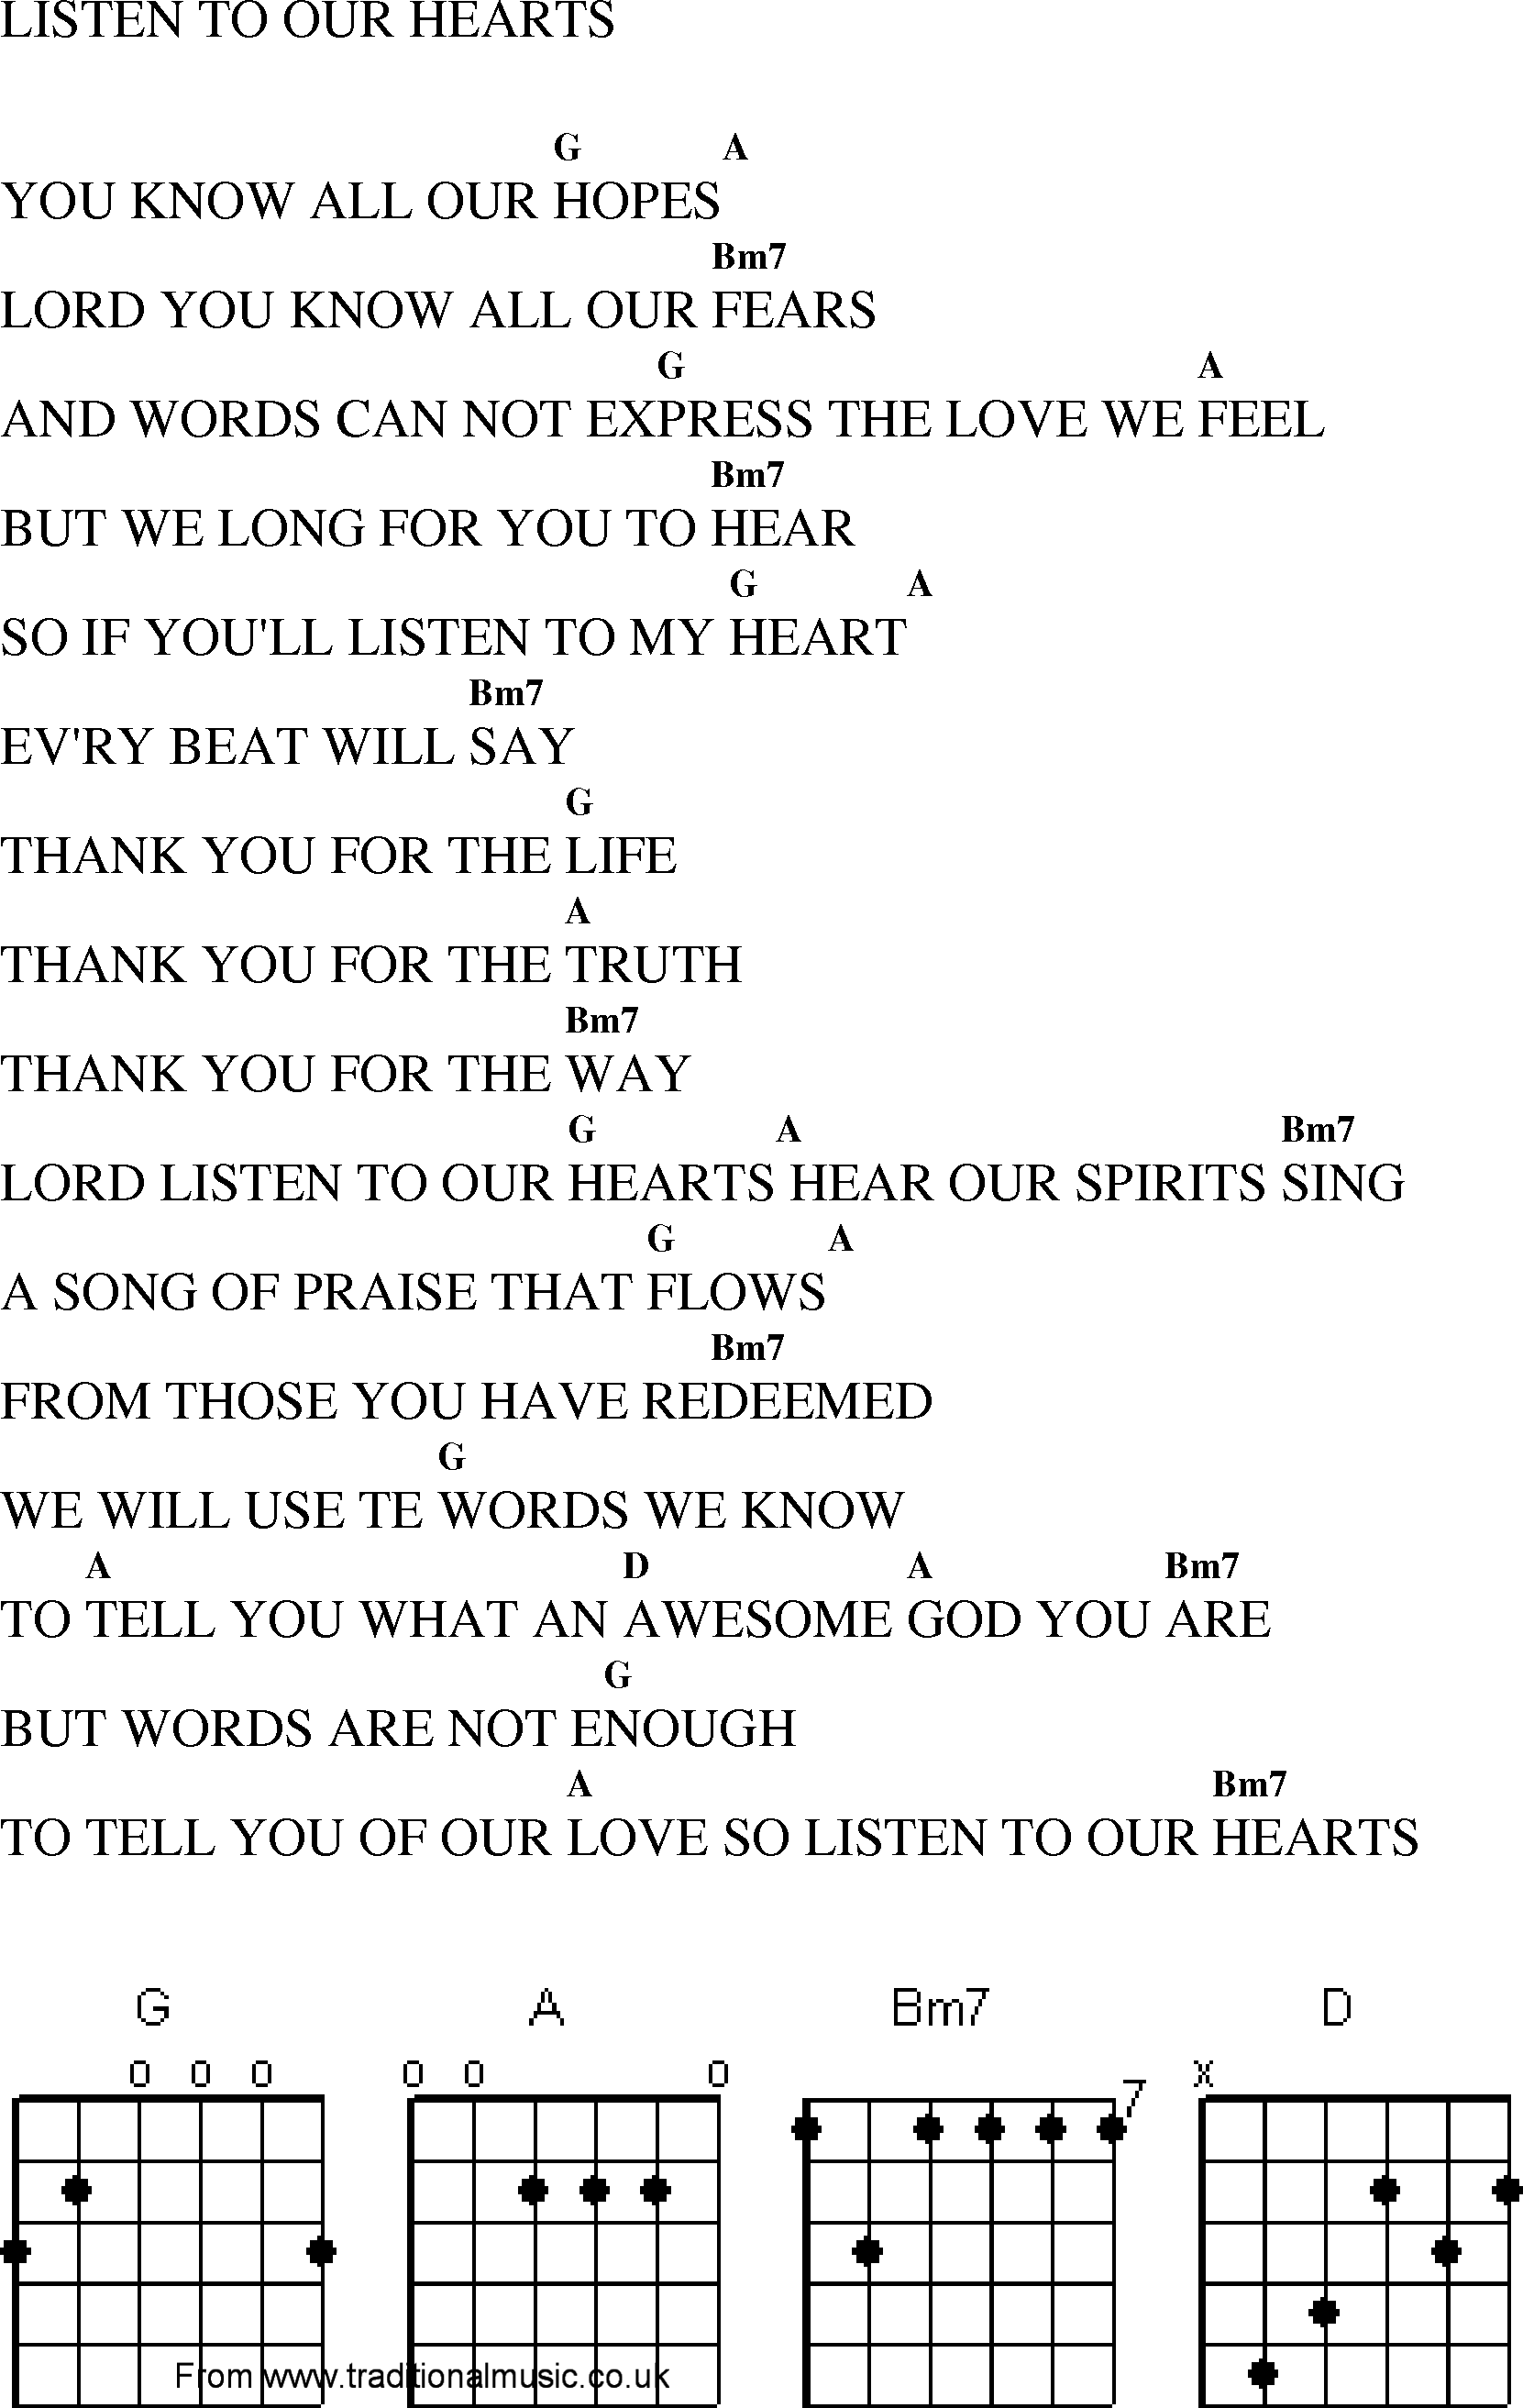 Heart Of Worship Lyrics And Chords - Photos Idea